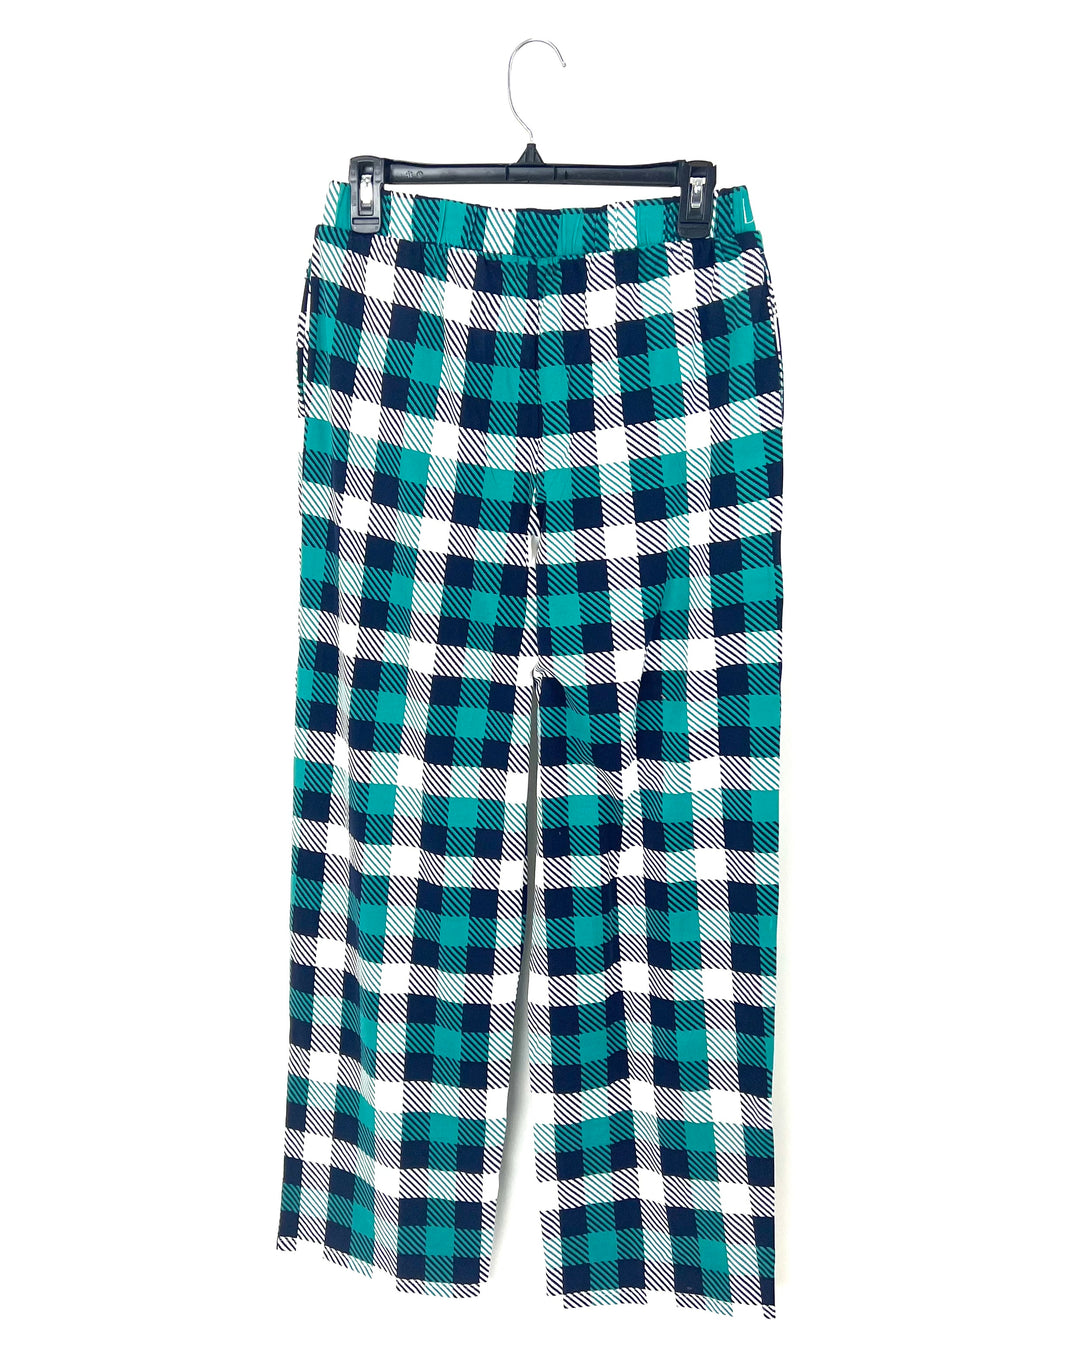 Checkered Sleep Pants - Size 6/8